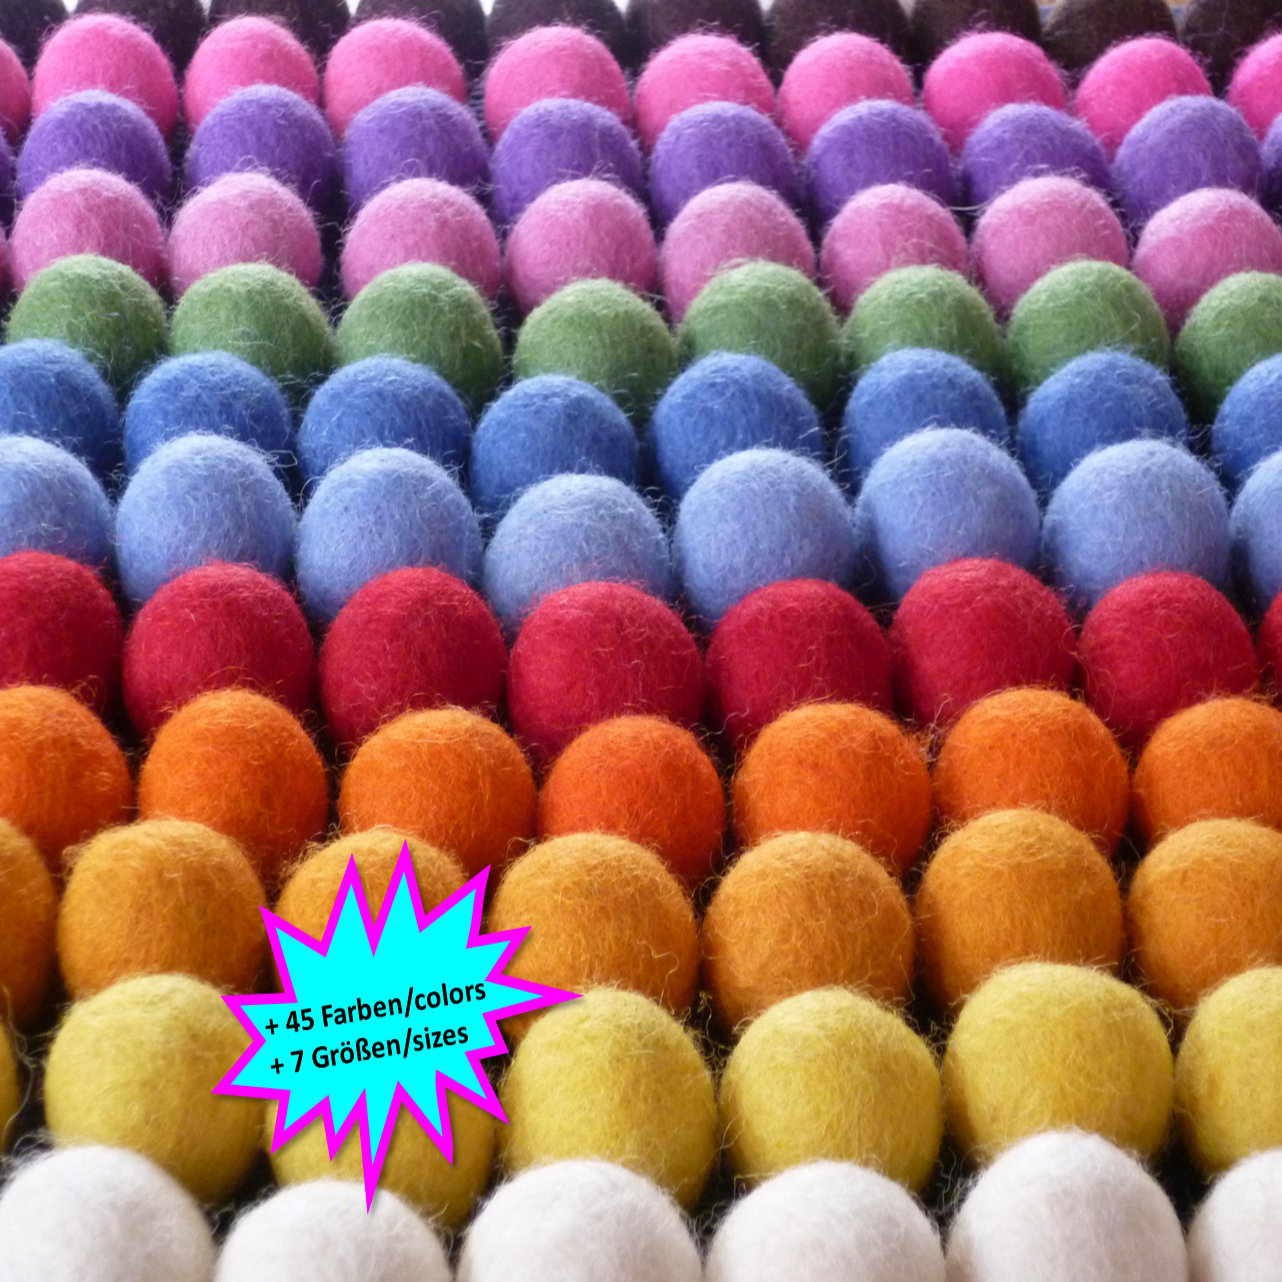 2.5 Cm Wool Felt Balls in Rainbow Colors, Wool Felted Balls, Felt Crafting  Supplies, Bulk Felt Balls, Felt Pom Poms, Handmade Felt Balls 